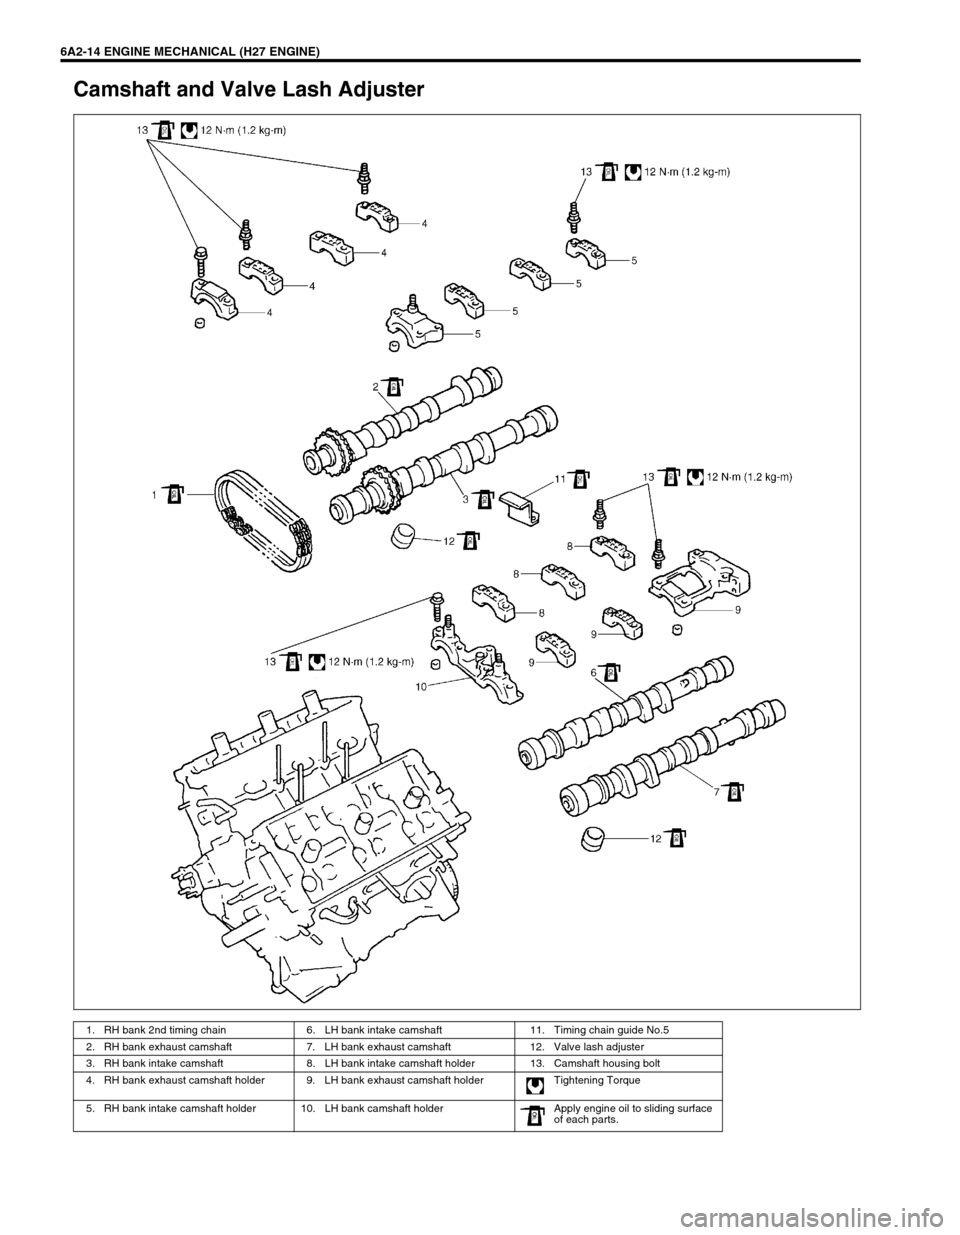 SUZUKI GRAND VITARA 1999 2.G Repair Manual 6A2-14 ENGINE MECHANICAL (H27 ENGINE)
Camshaft and Valve Lash Adjuster
1. RH bank 2nd timing chain 6. LH bank intake camshaft 11. Timing chain guide No.5
2. RH bank exhaust camshaft 7. LH bank exhaust